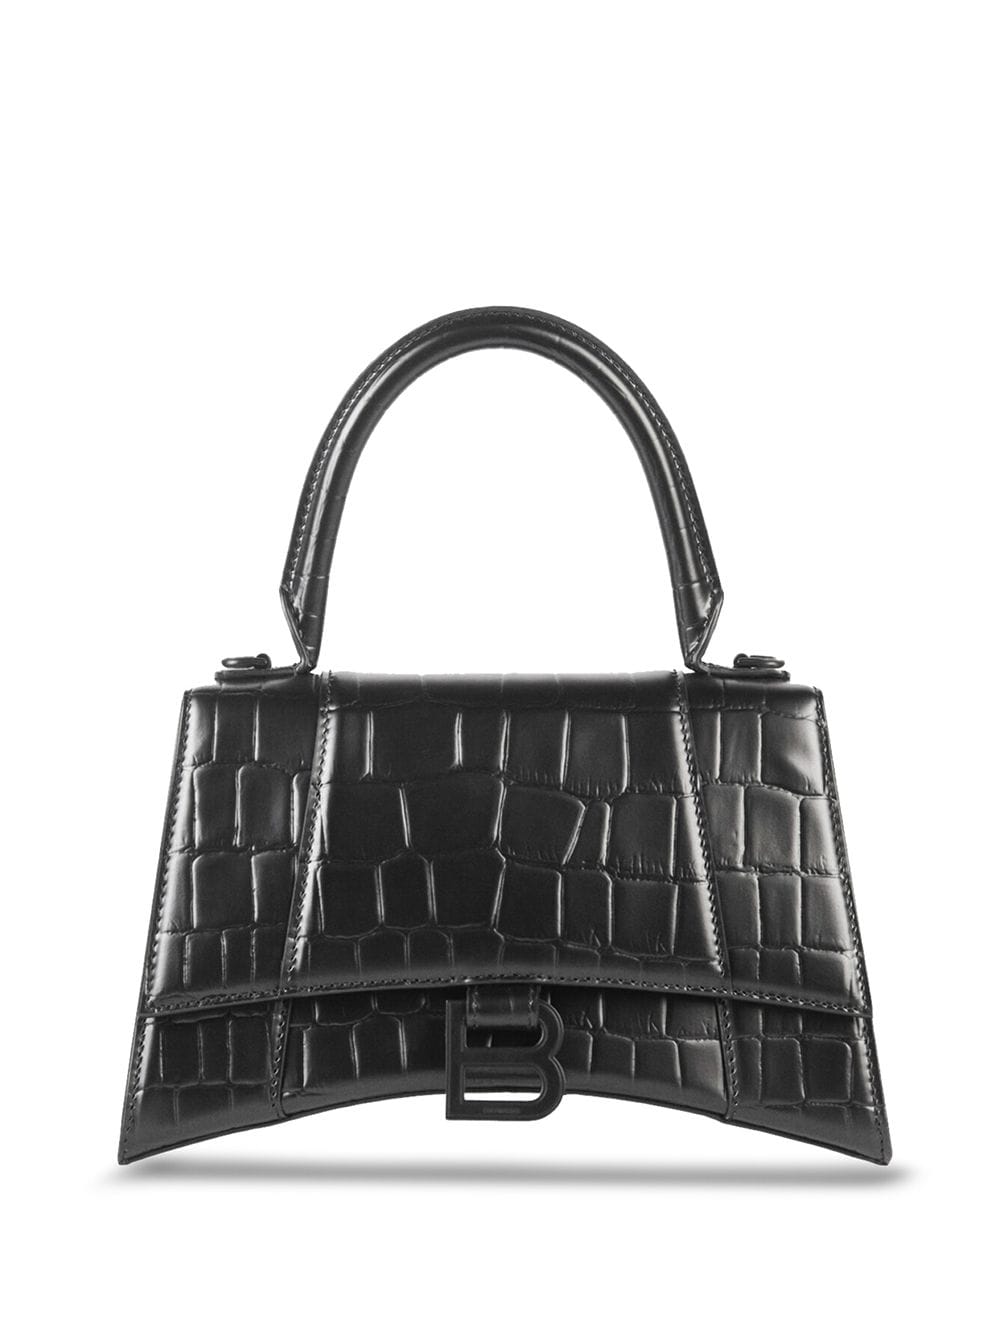 Balenciaga Small Hourglass Croc Embossed Black Leather Top Handle Bag New